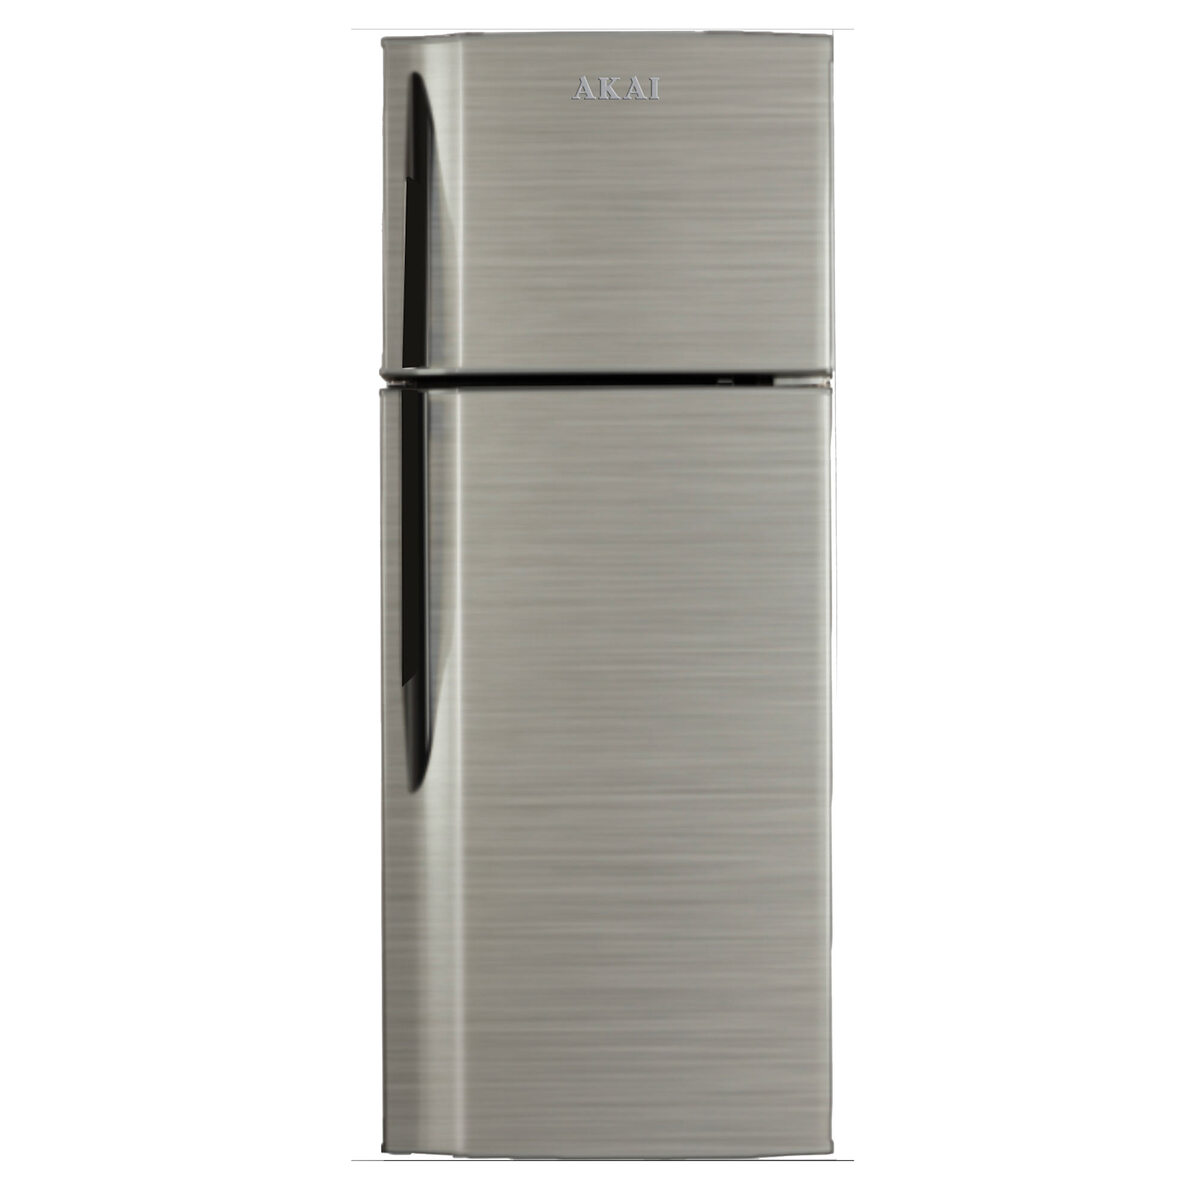 Akai Double Door Refrigerator,ART3900G 211Ltr